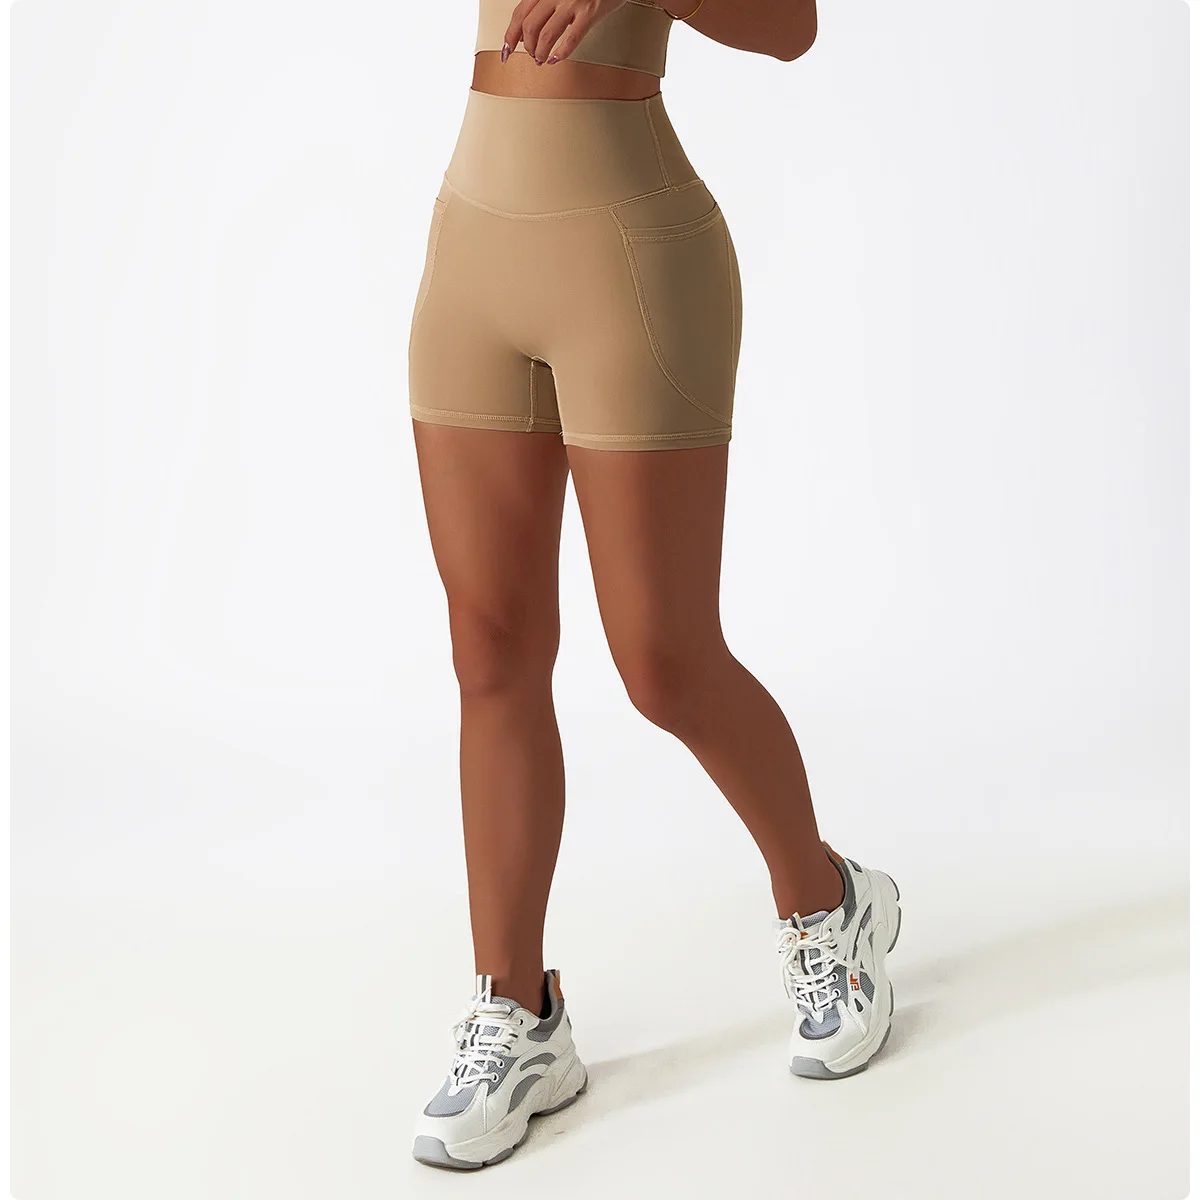 Summer Yoga Shorts with Pockets Biker Shorts High Waisted Workout For Women Running Shorts